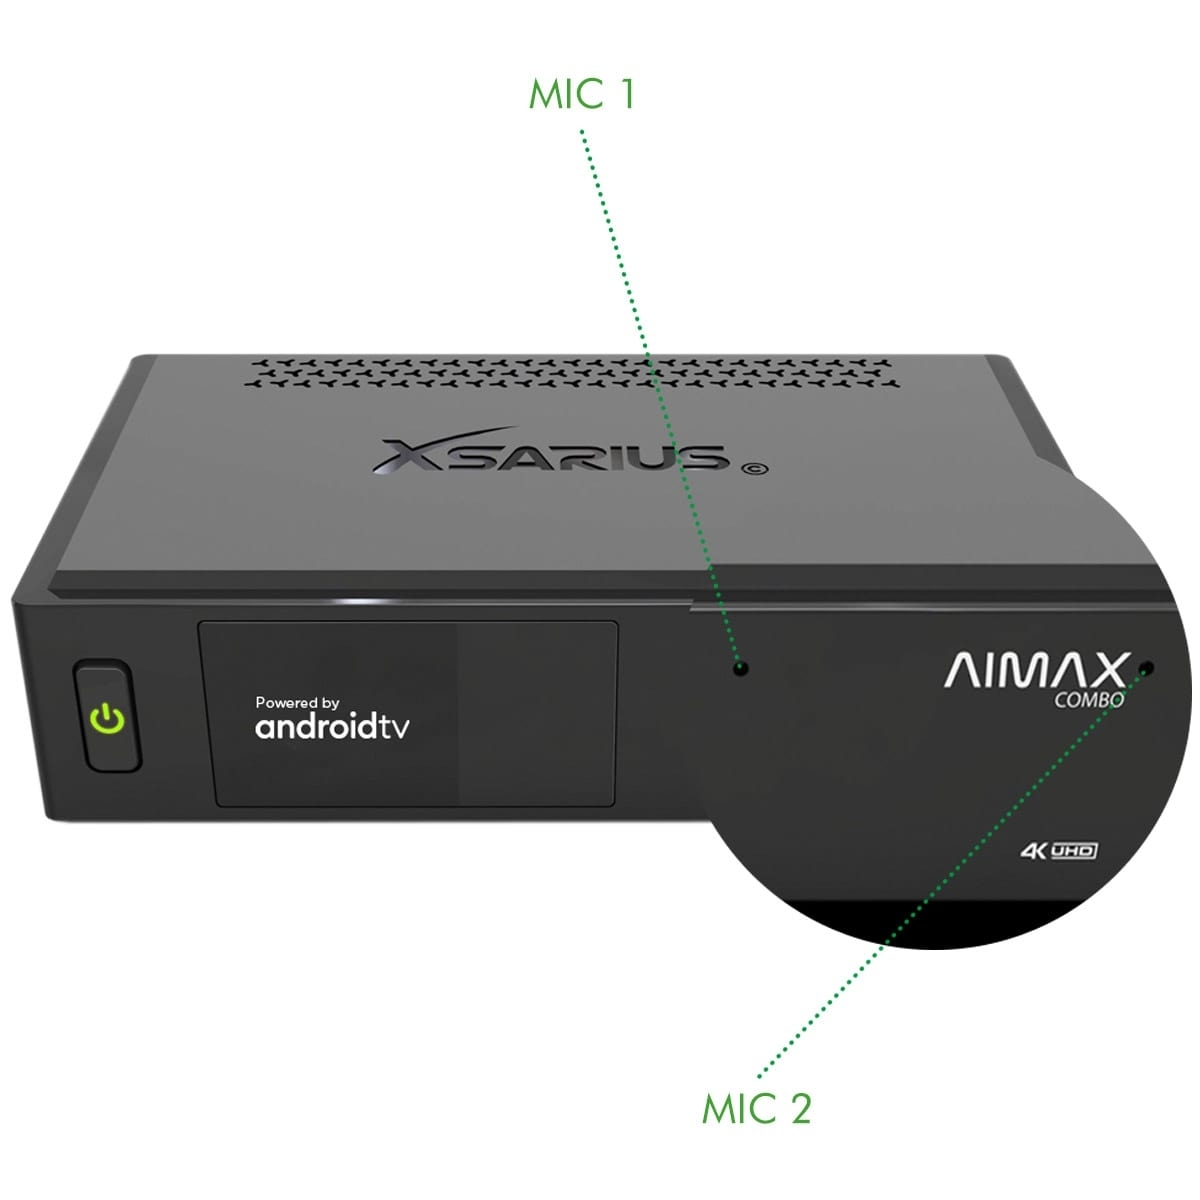 IP-Receiver DVB-C Sat Kabel AI, Hybrid & (PVR-Funktion, Schwarz) Mediaplayer UHD XSARIUS MicroSD) DVB-S2X Dual-WiFi, 8.0, 4K AIMAX Sat 4K COMBO (Android